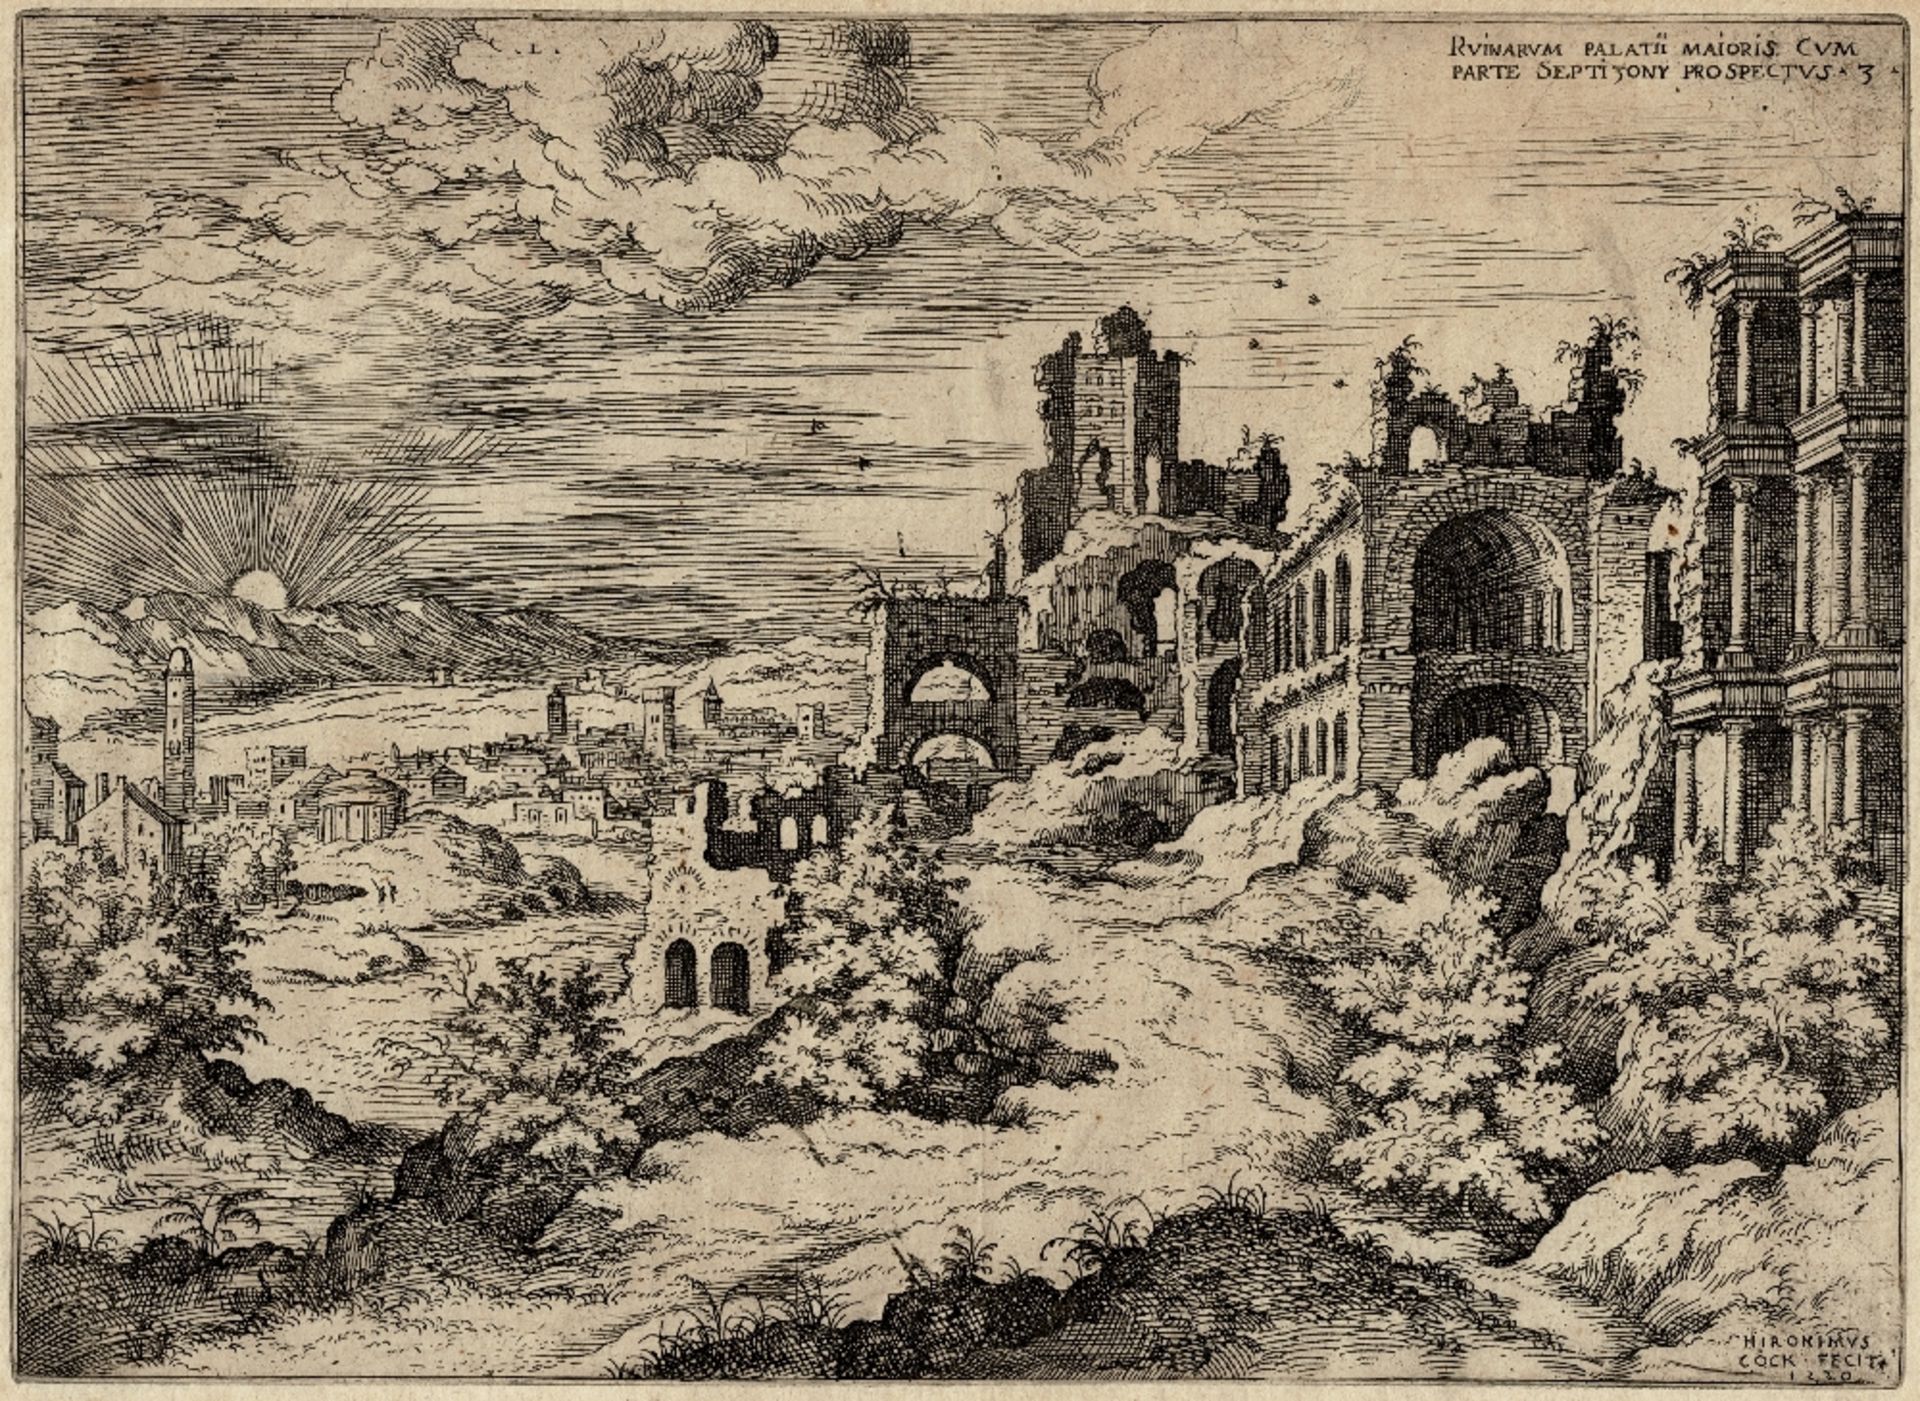  Hieronymus Cock (1517-1570) - Palatine Ruins - 1551